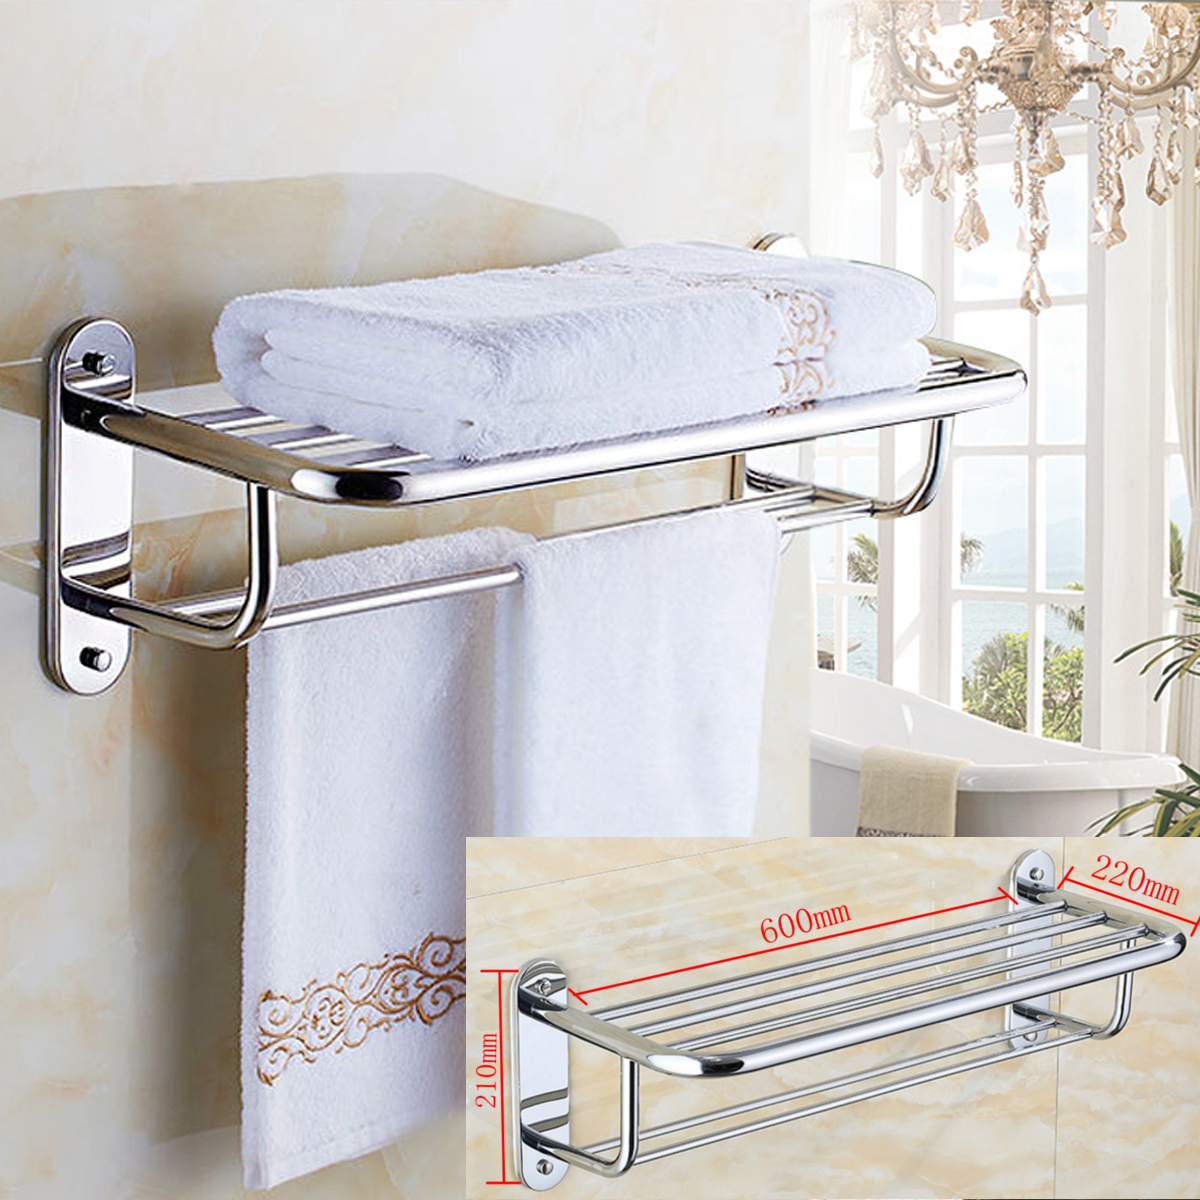 Chrome-Stylish-Bathroom-Wall-Mounted-Towel-Rail-Holder-Shelf-Storage-Rack-1258253-2